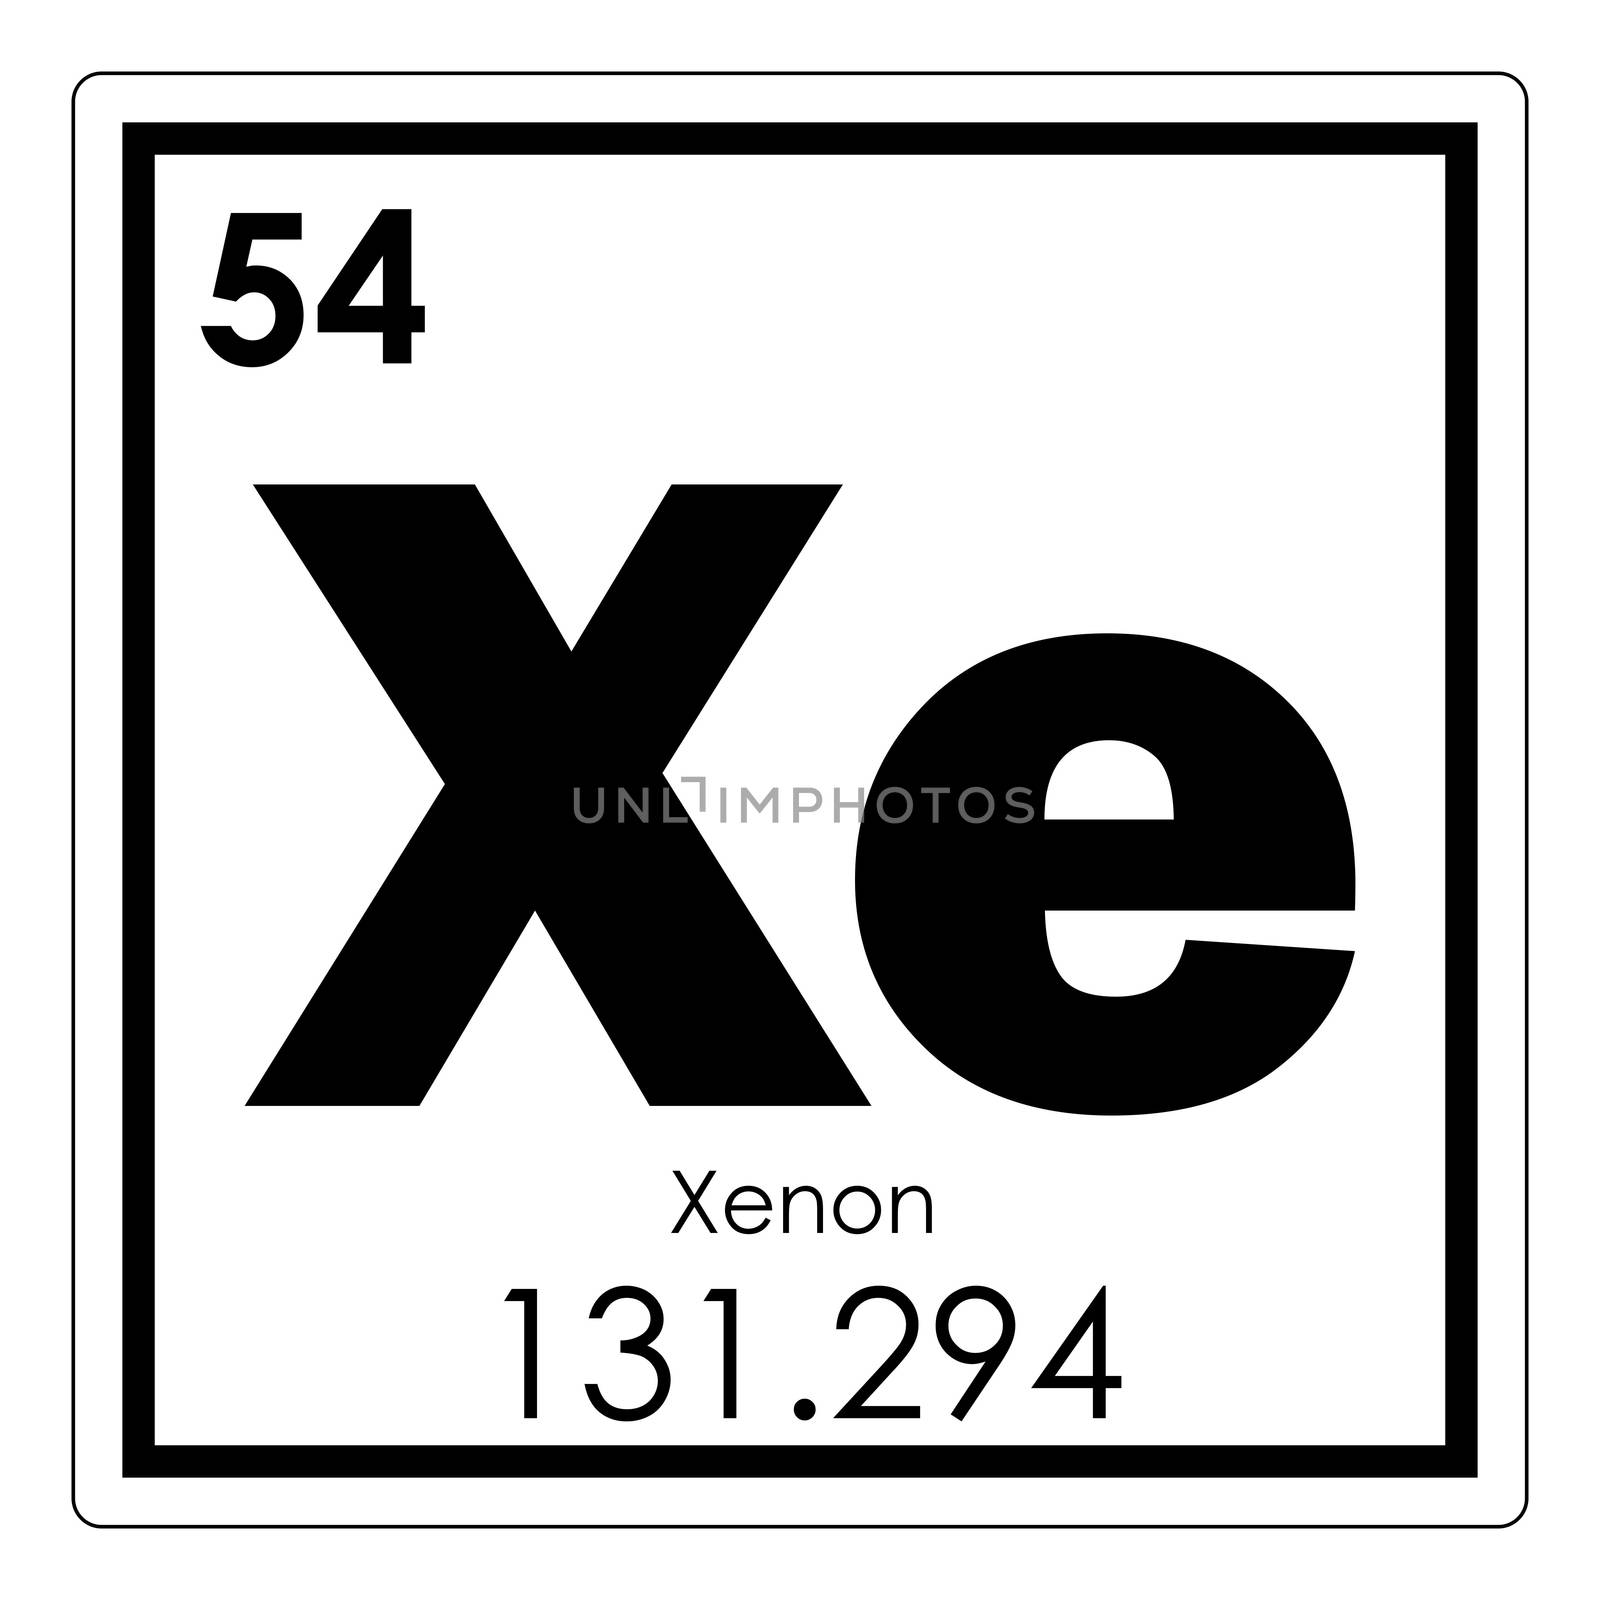 Xenon chemical element by tony4urban